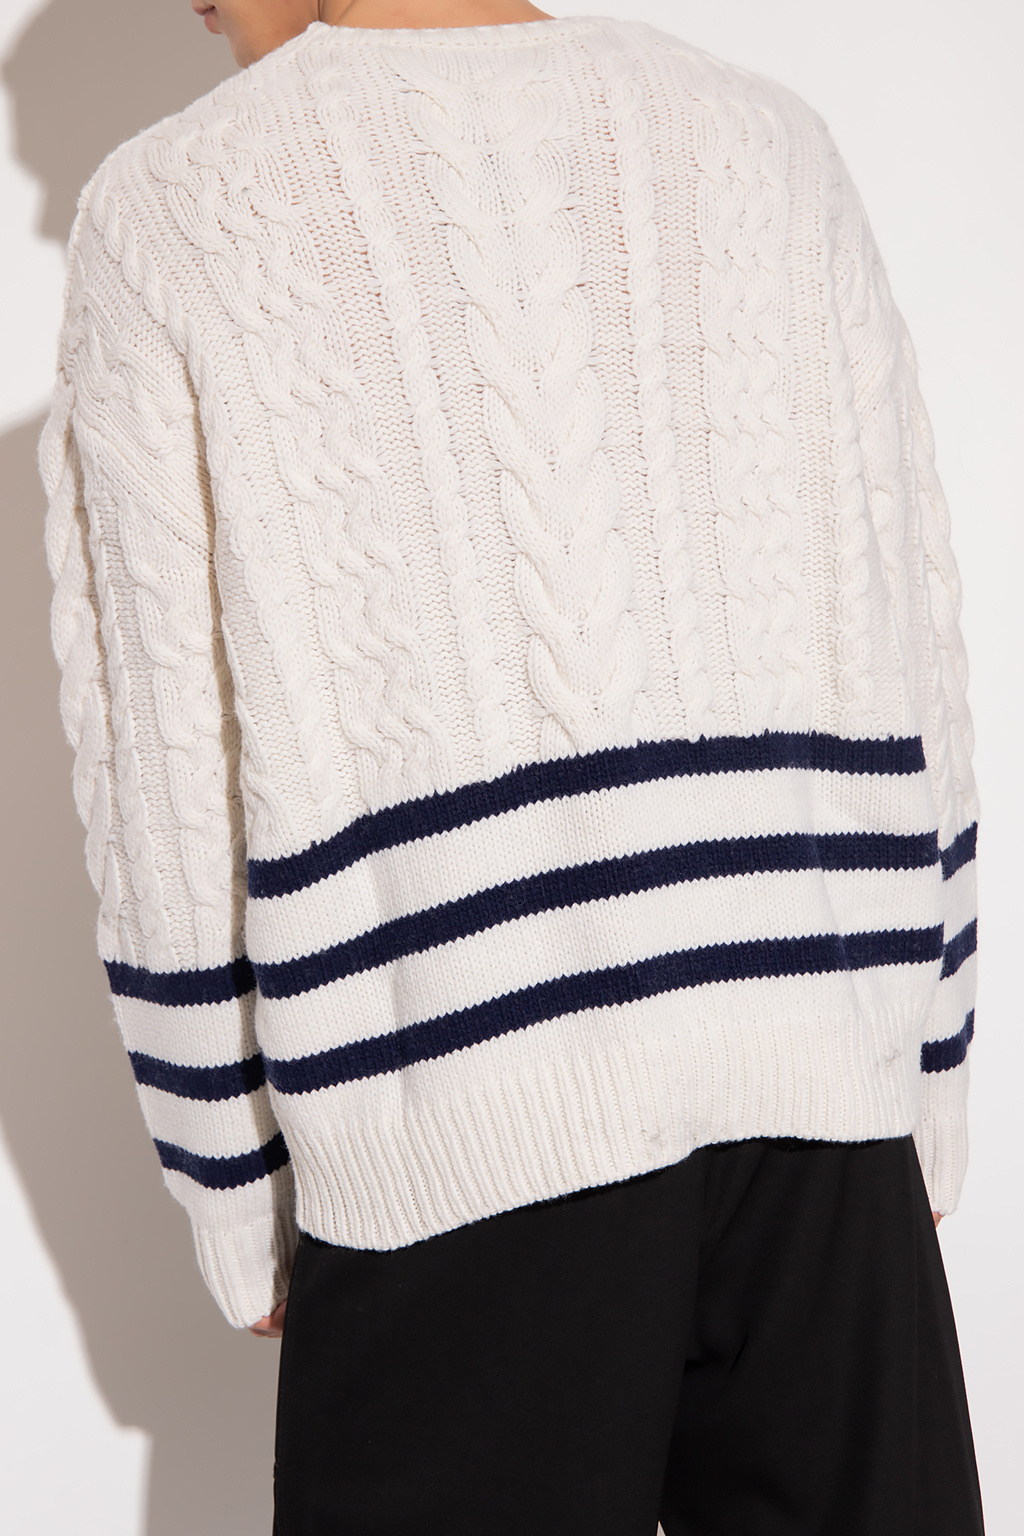 Iro ‘Walsh’ sweater